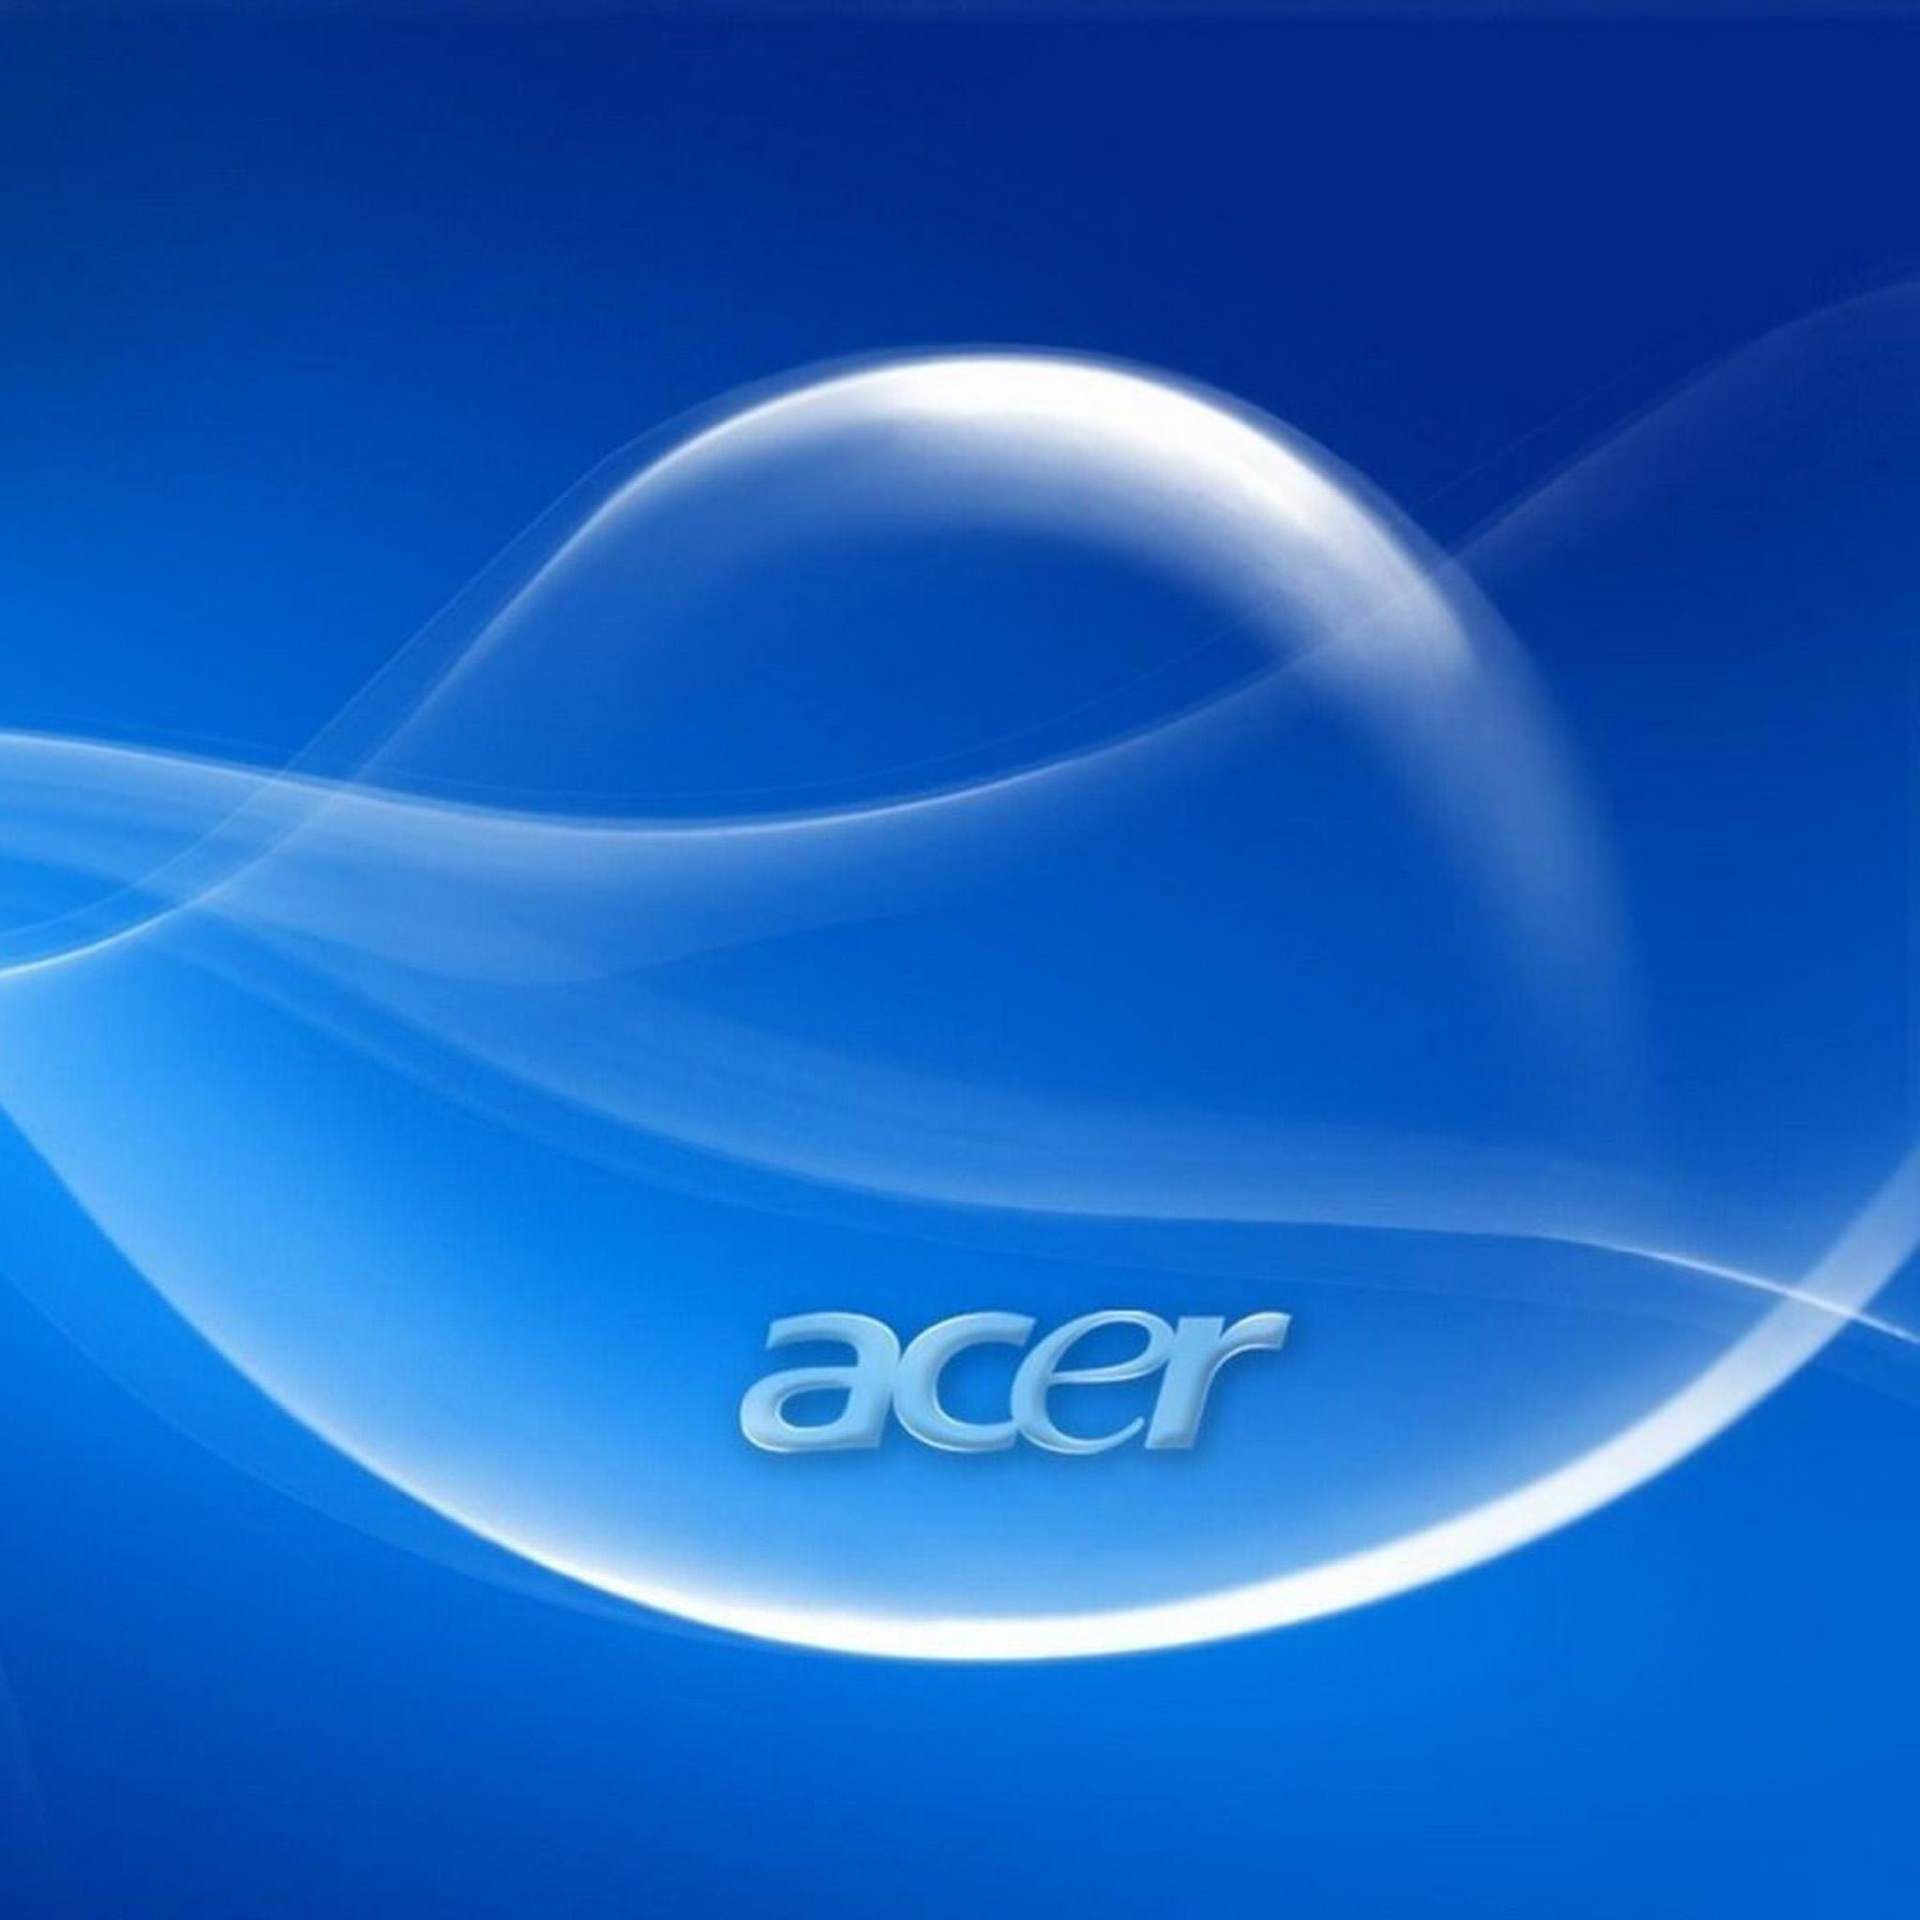 Acer logo | wallpaper.sc SmartPhone